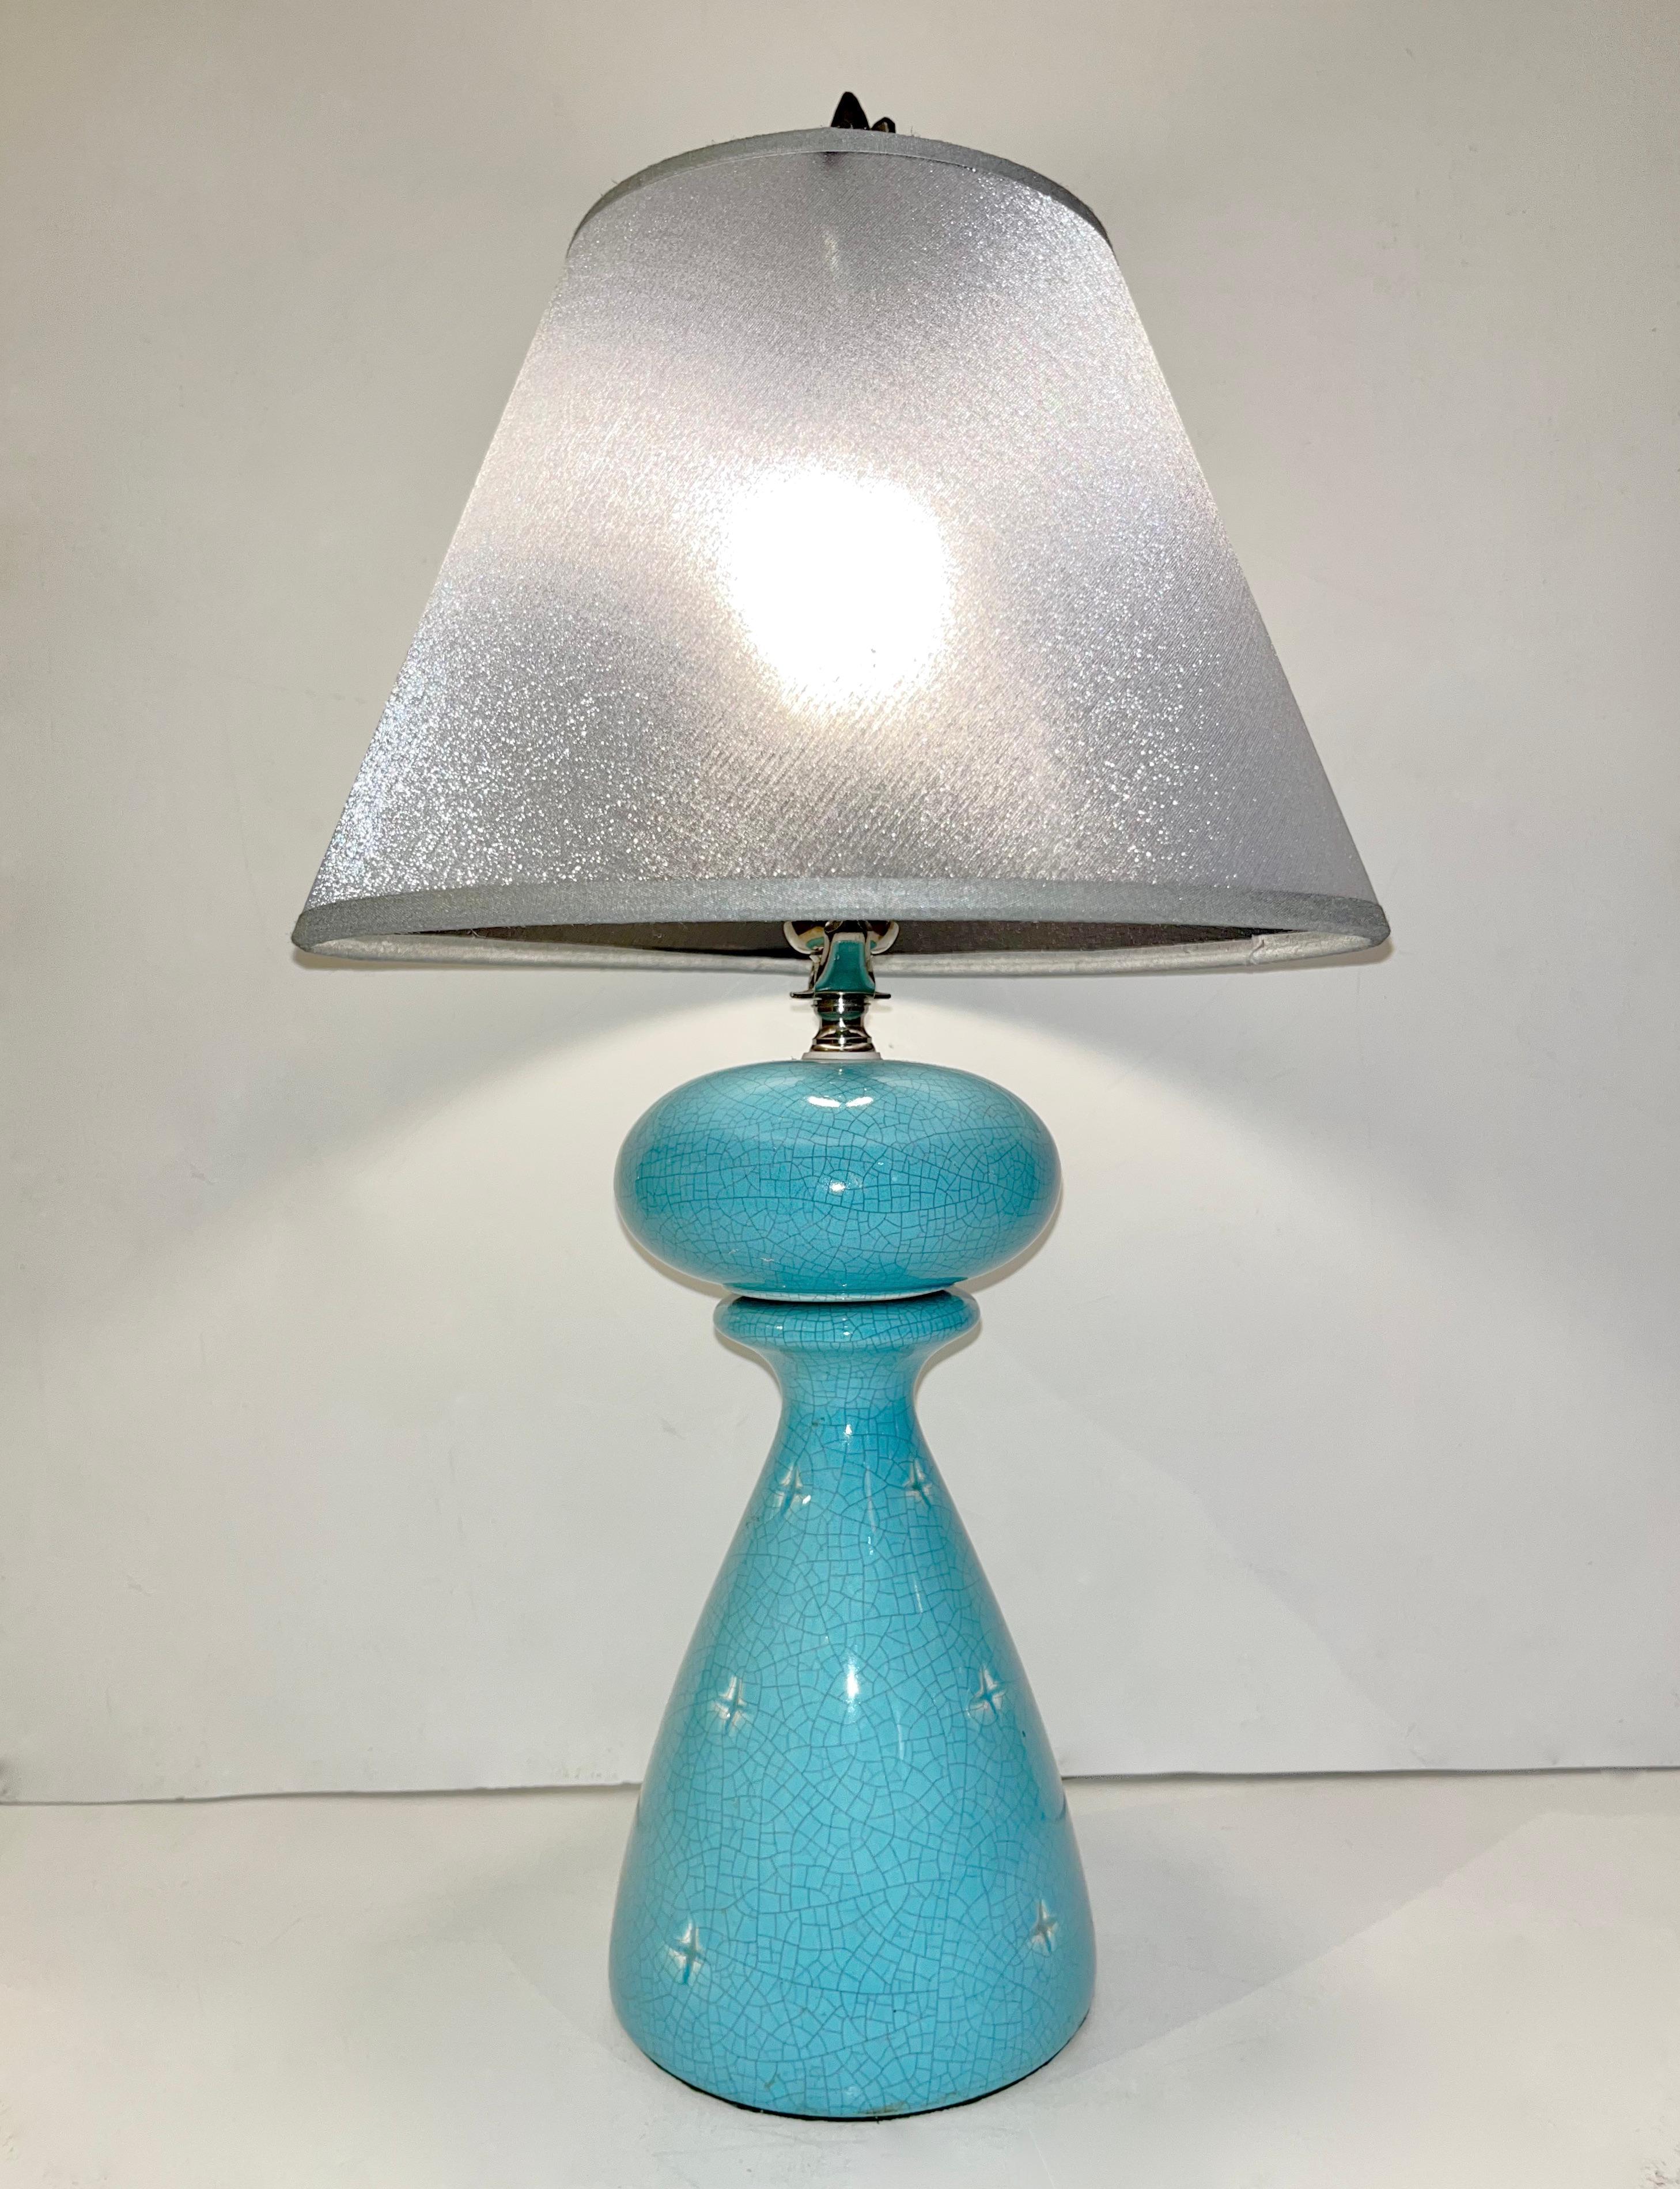 1960s French Pair of Aquamarine Blue Craquelure Glaze Ceramic Lamps with Stars For Sale 2